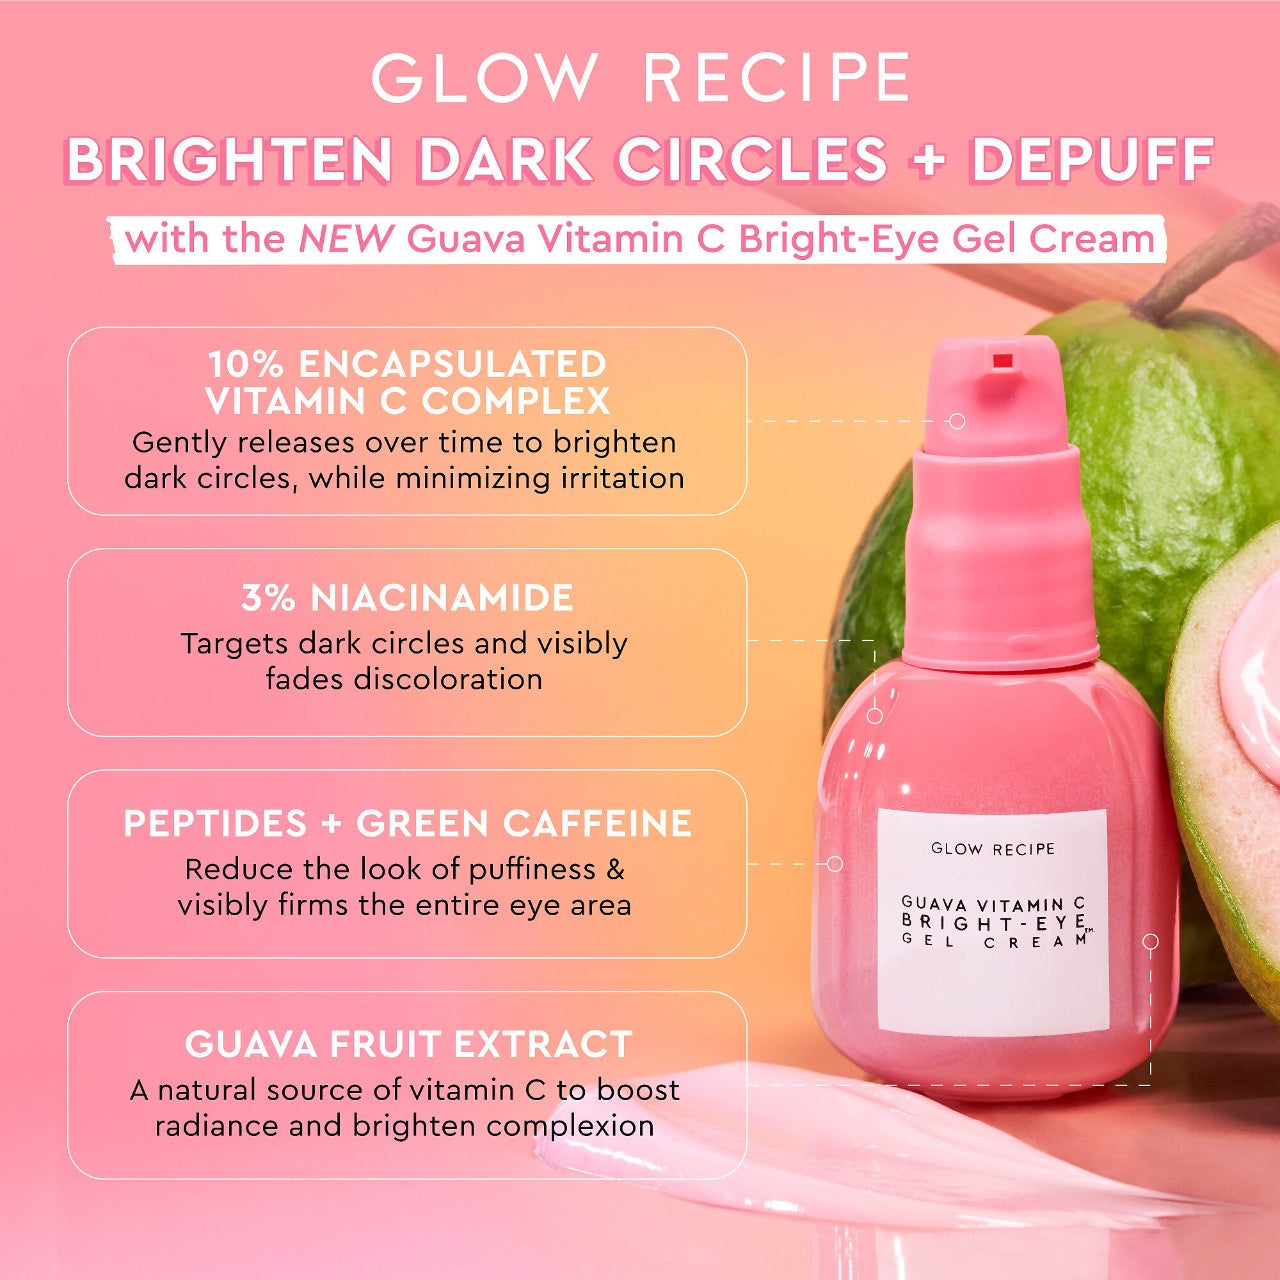 GLOW RECIPE - Guava Vitamin C Bright-Eye Gel Cream